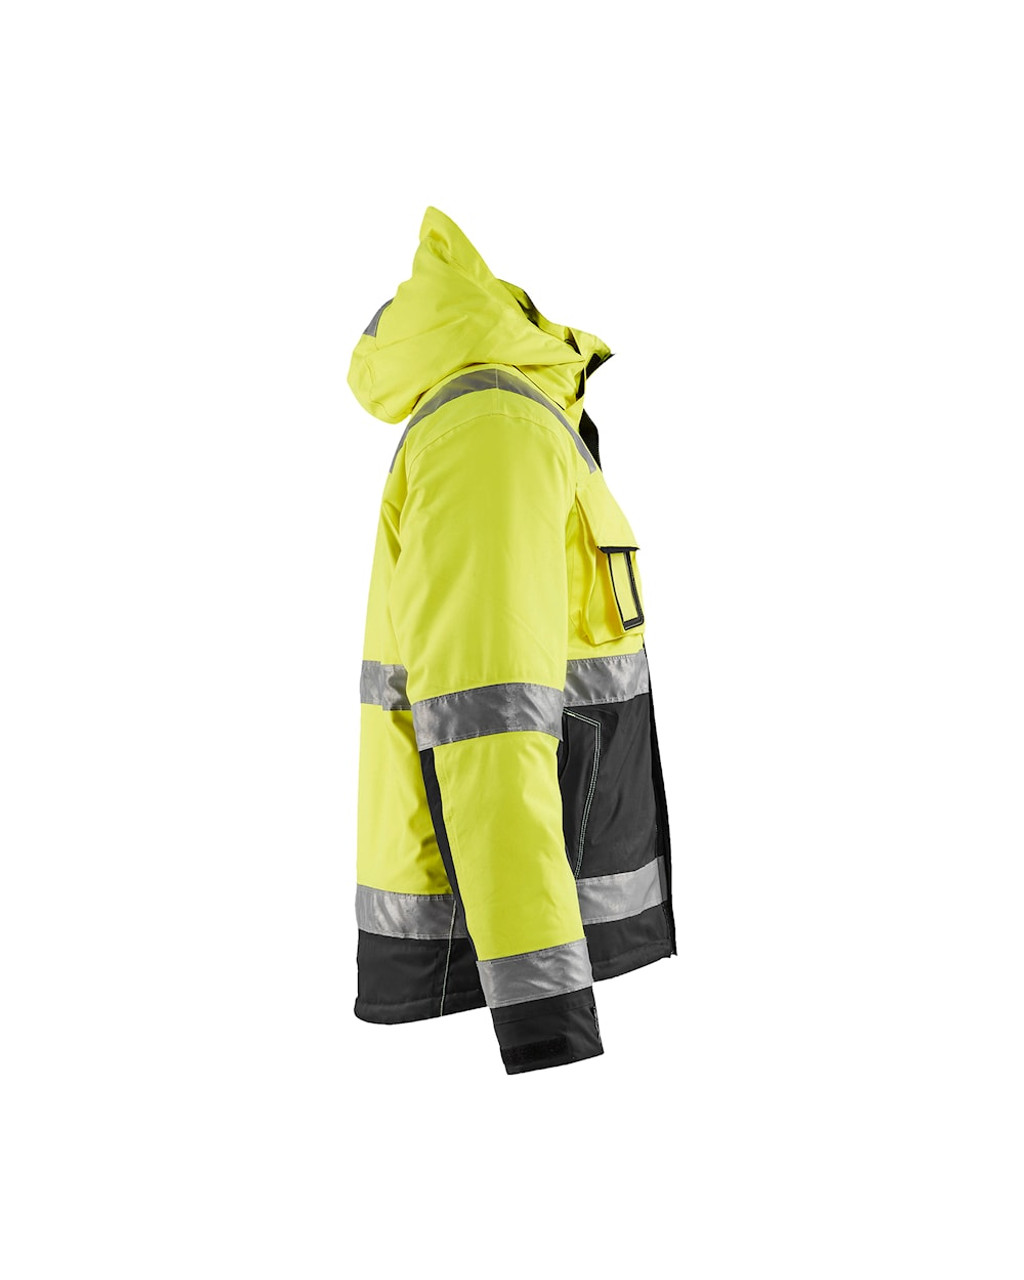 Mens Hiking Jacket  4790  - High Vis Yellow  Full Zip  Waterproof & Breathable for Outdoor Adventures.